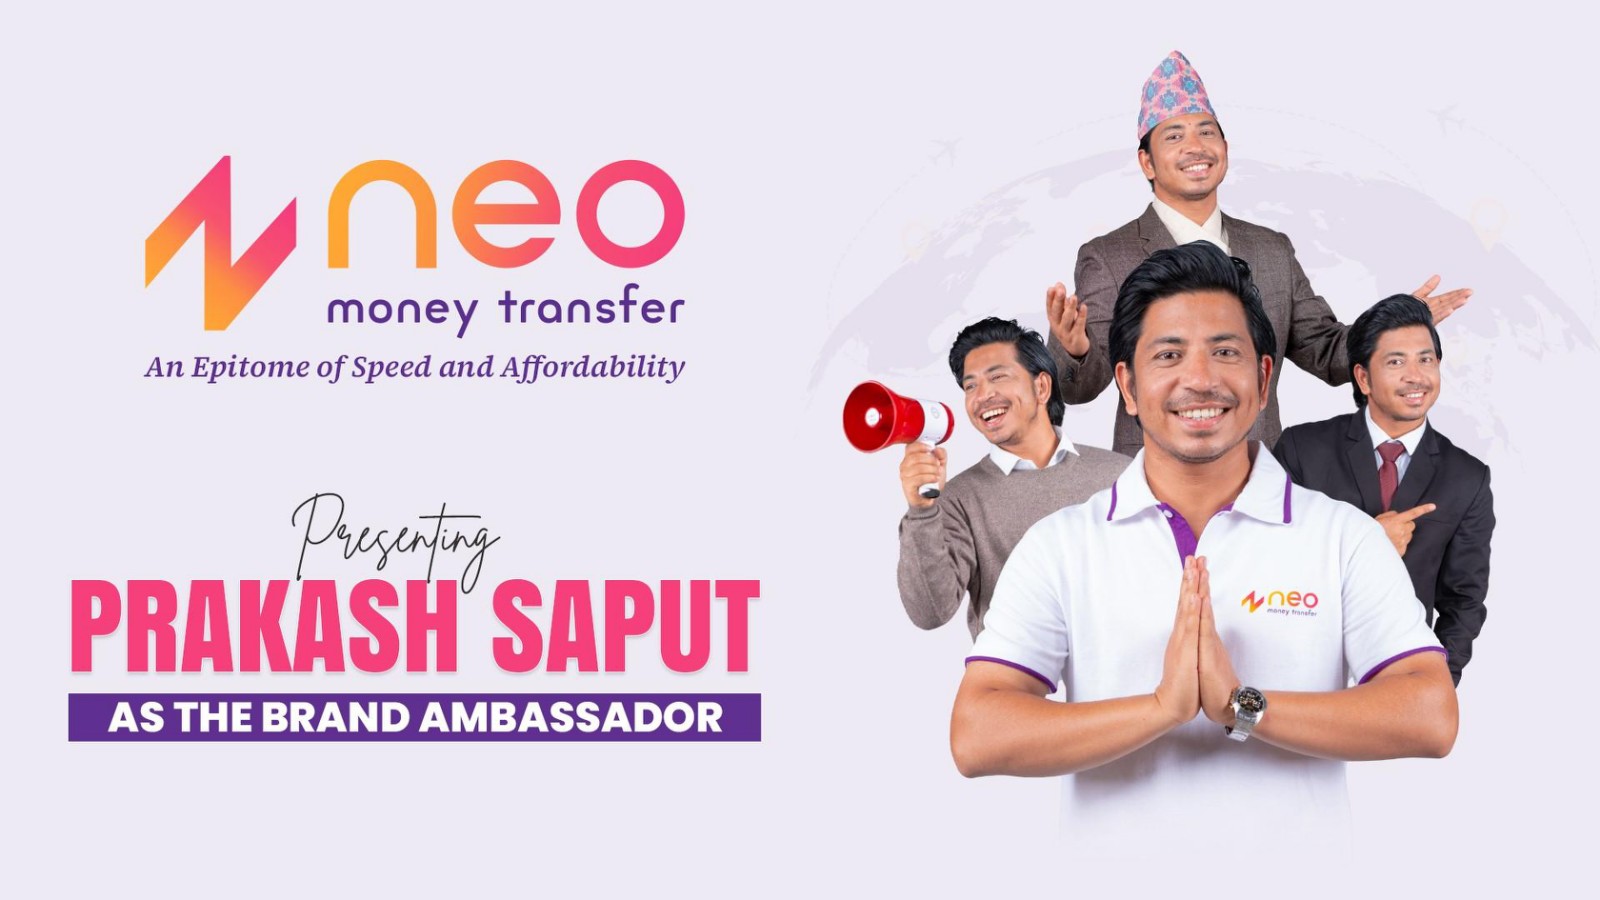 Neo Money Transfer appoints Prakash Saput as its Brand Ambassador